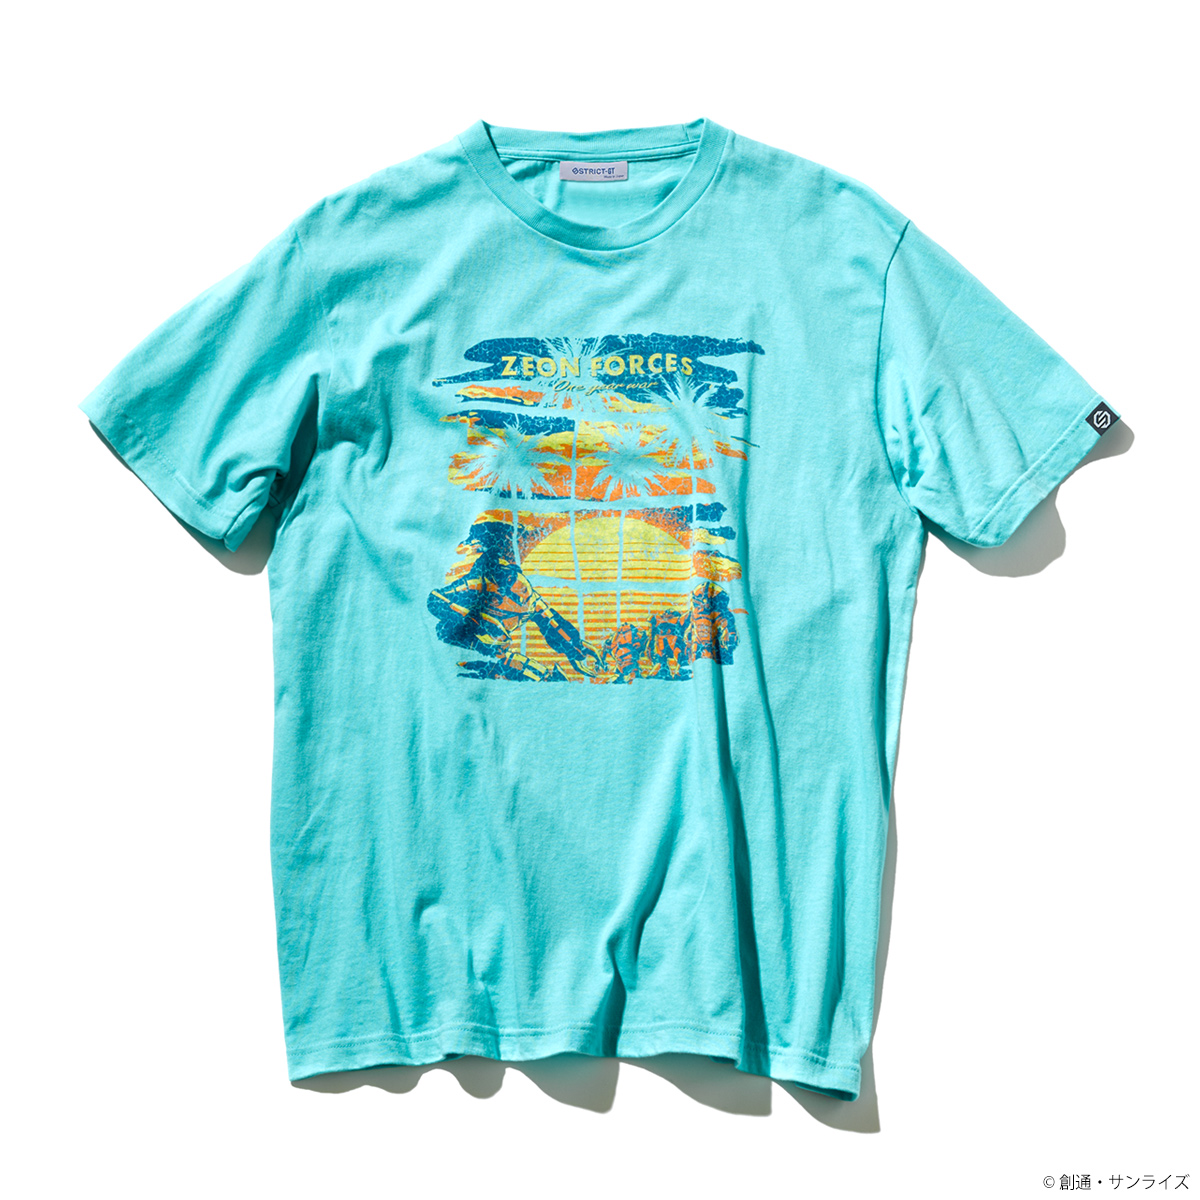 STRICT-G『機動戦士ガンダム』 サーフコレクションTシャツ サンセットジオン軍水陸両用MS柄